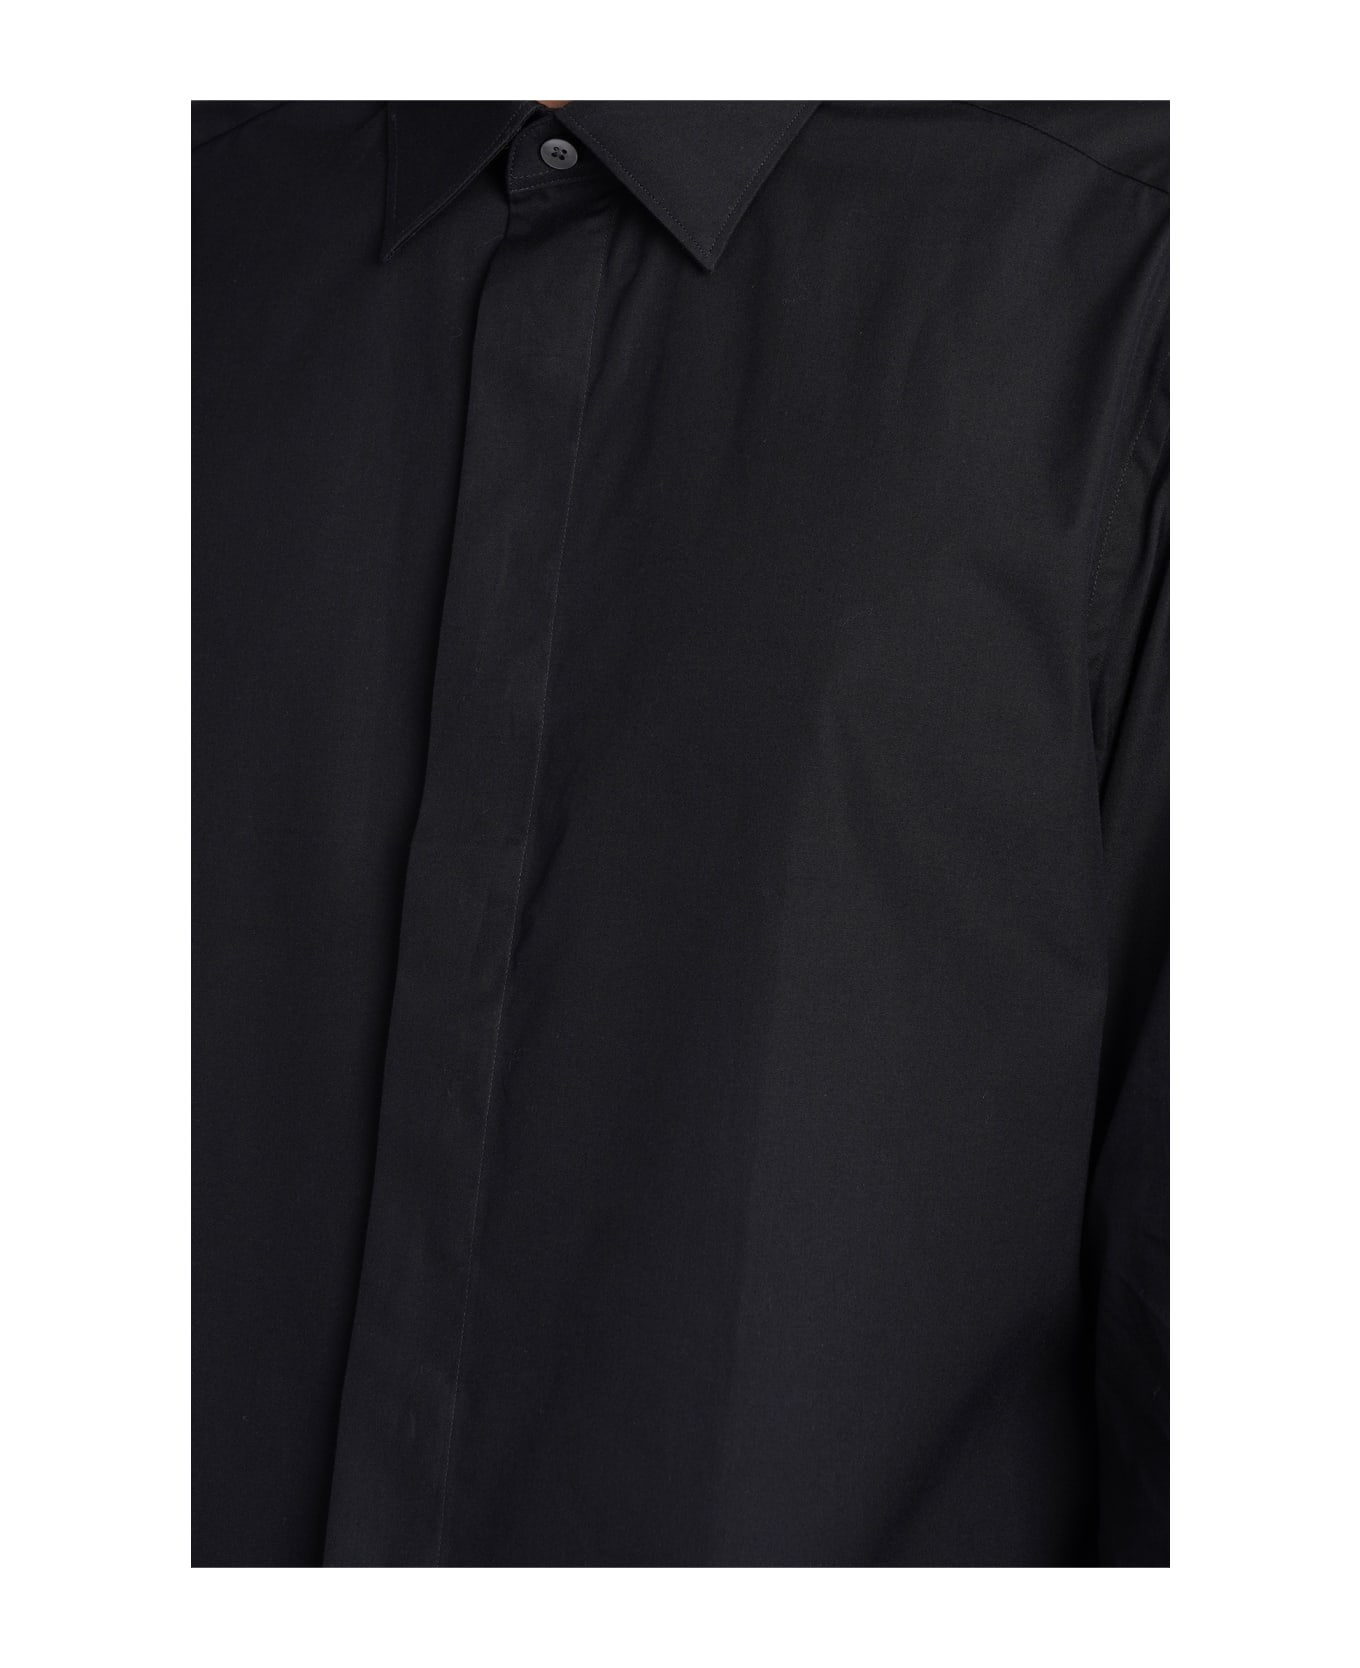 Zegna Shirt In Black Cotton - black